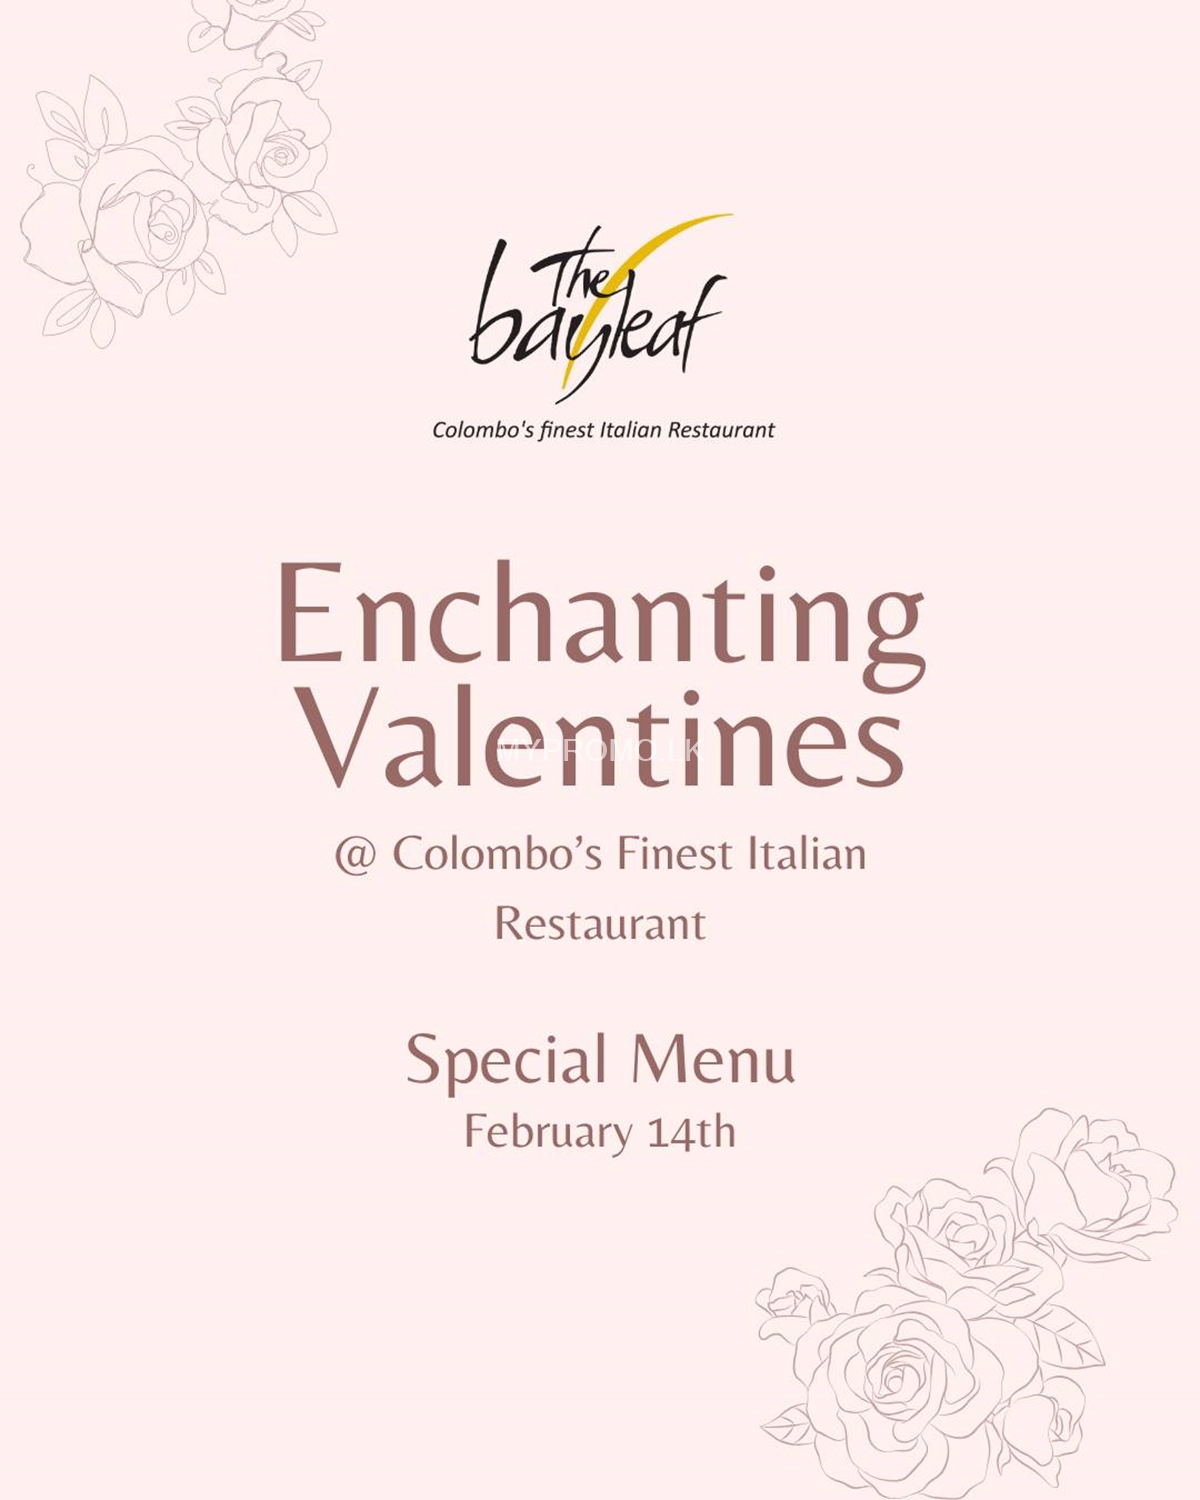 Special menu at Bayleaf this Valentine's Day